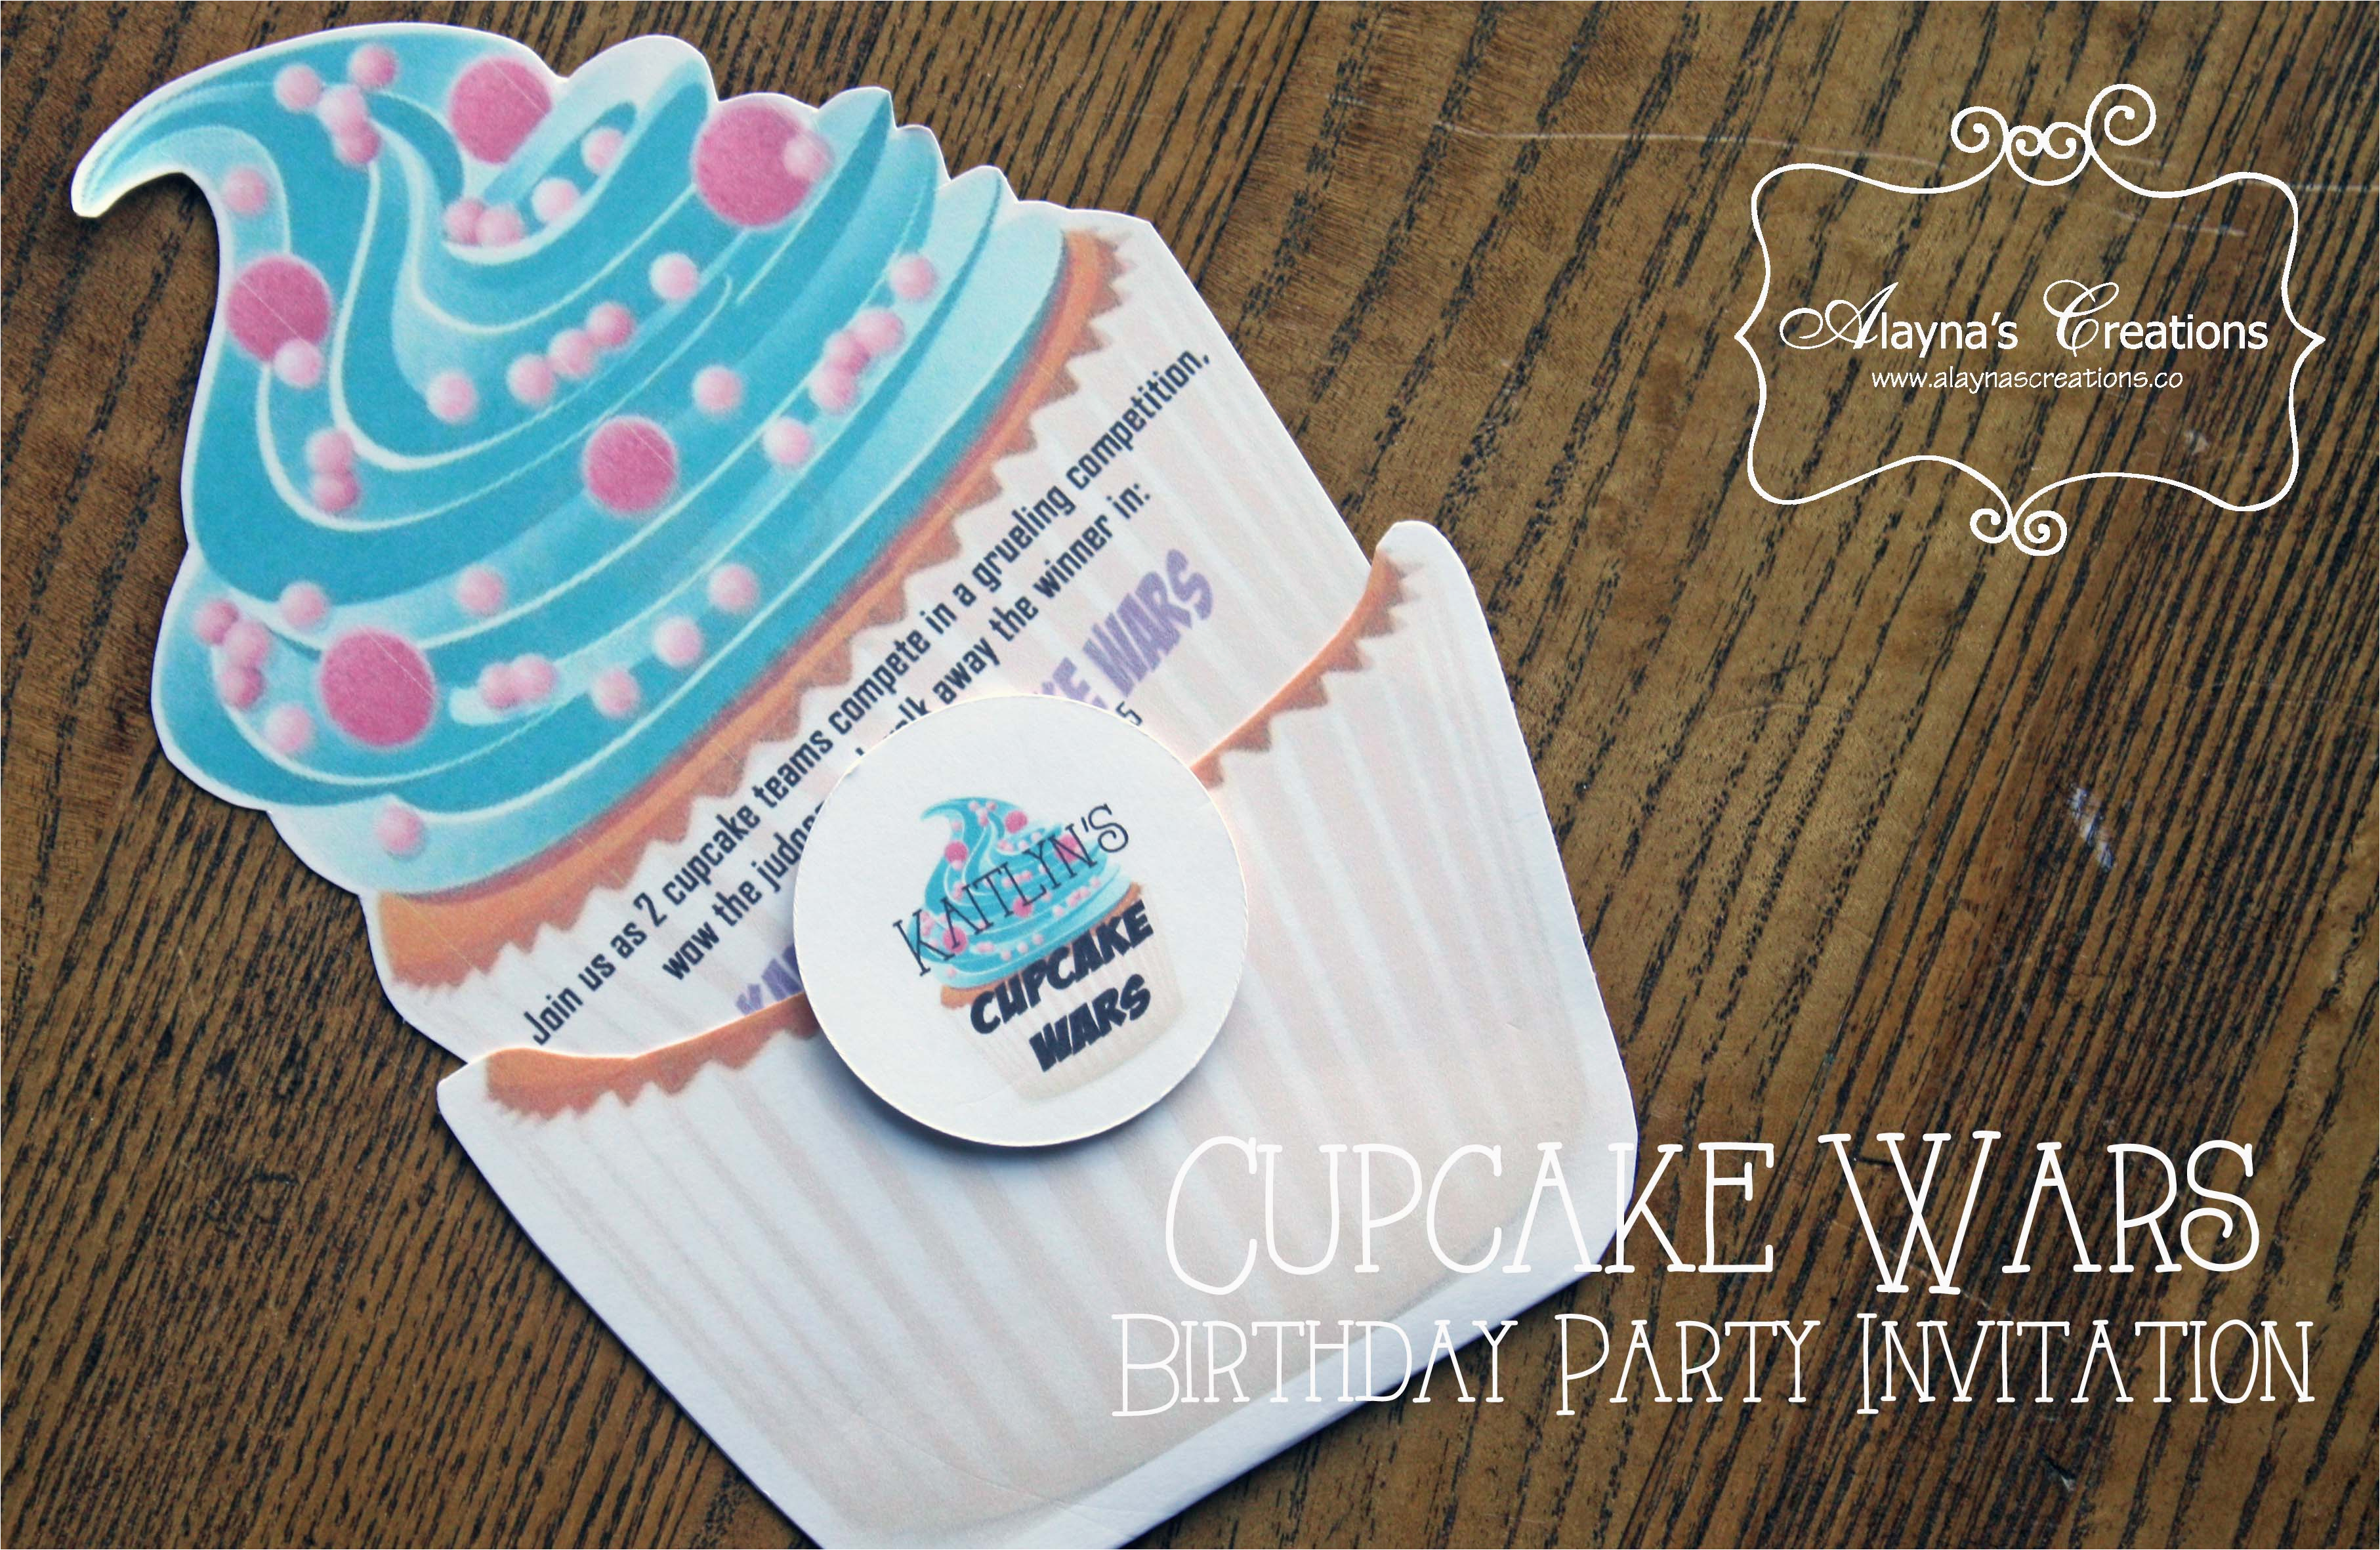 cupcake wars birthday party